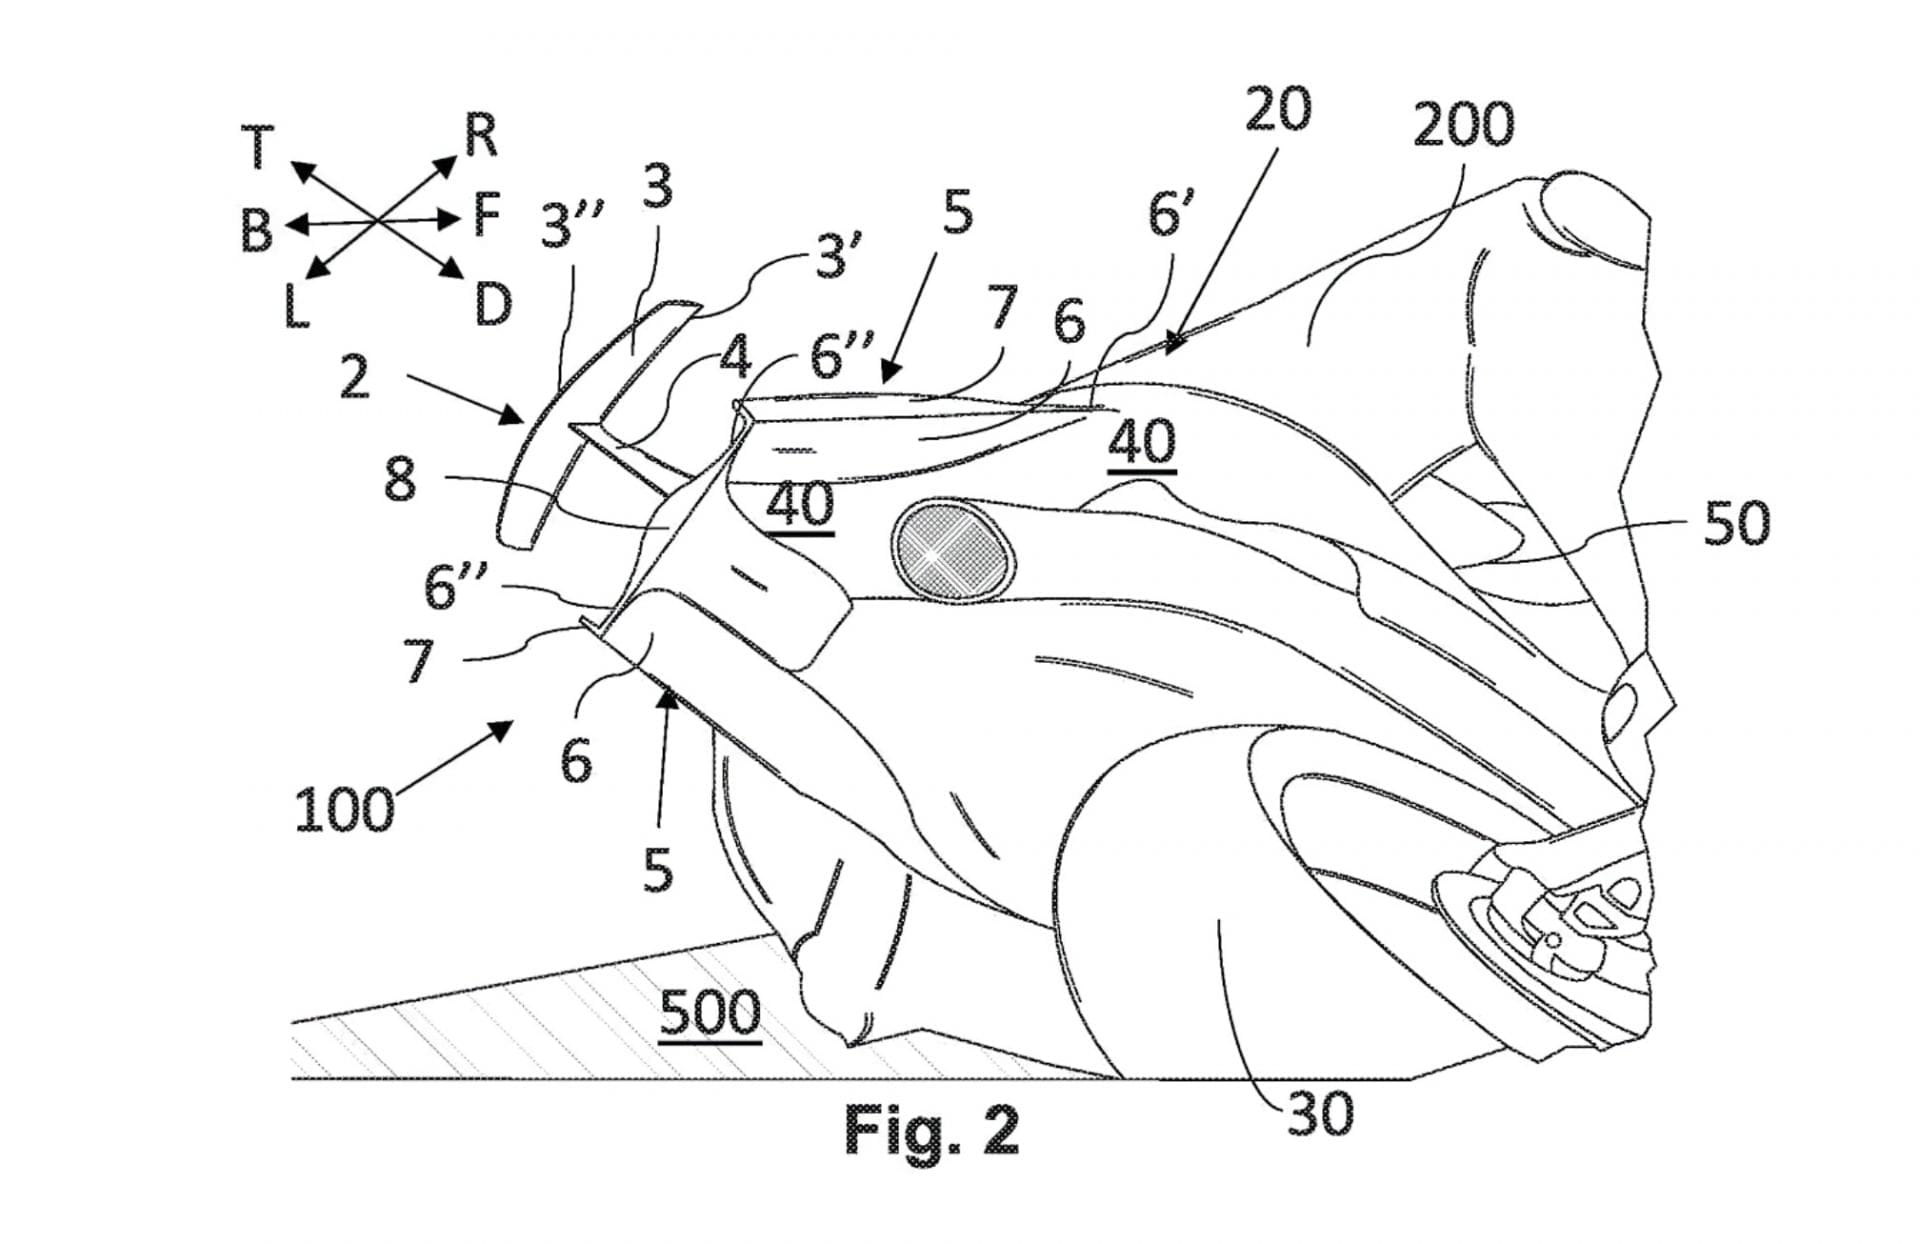 Aprilias Neues Patent: Heckspoiler für Straßenmotorräder